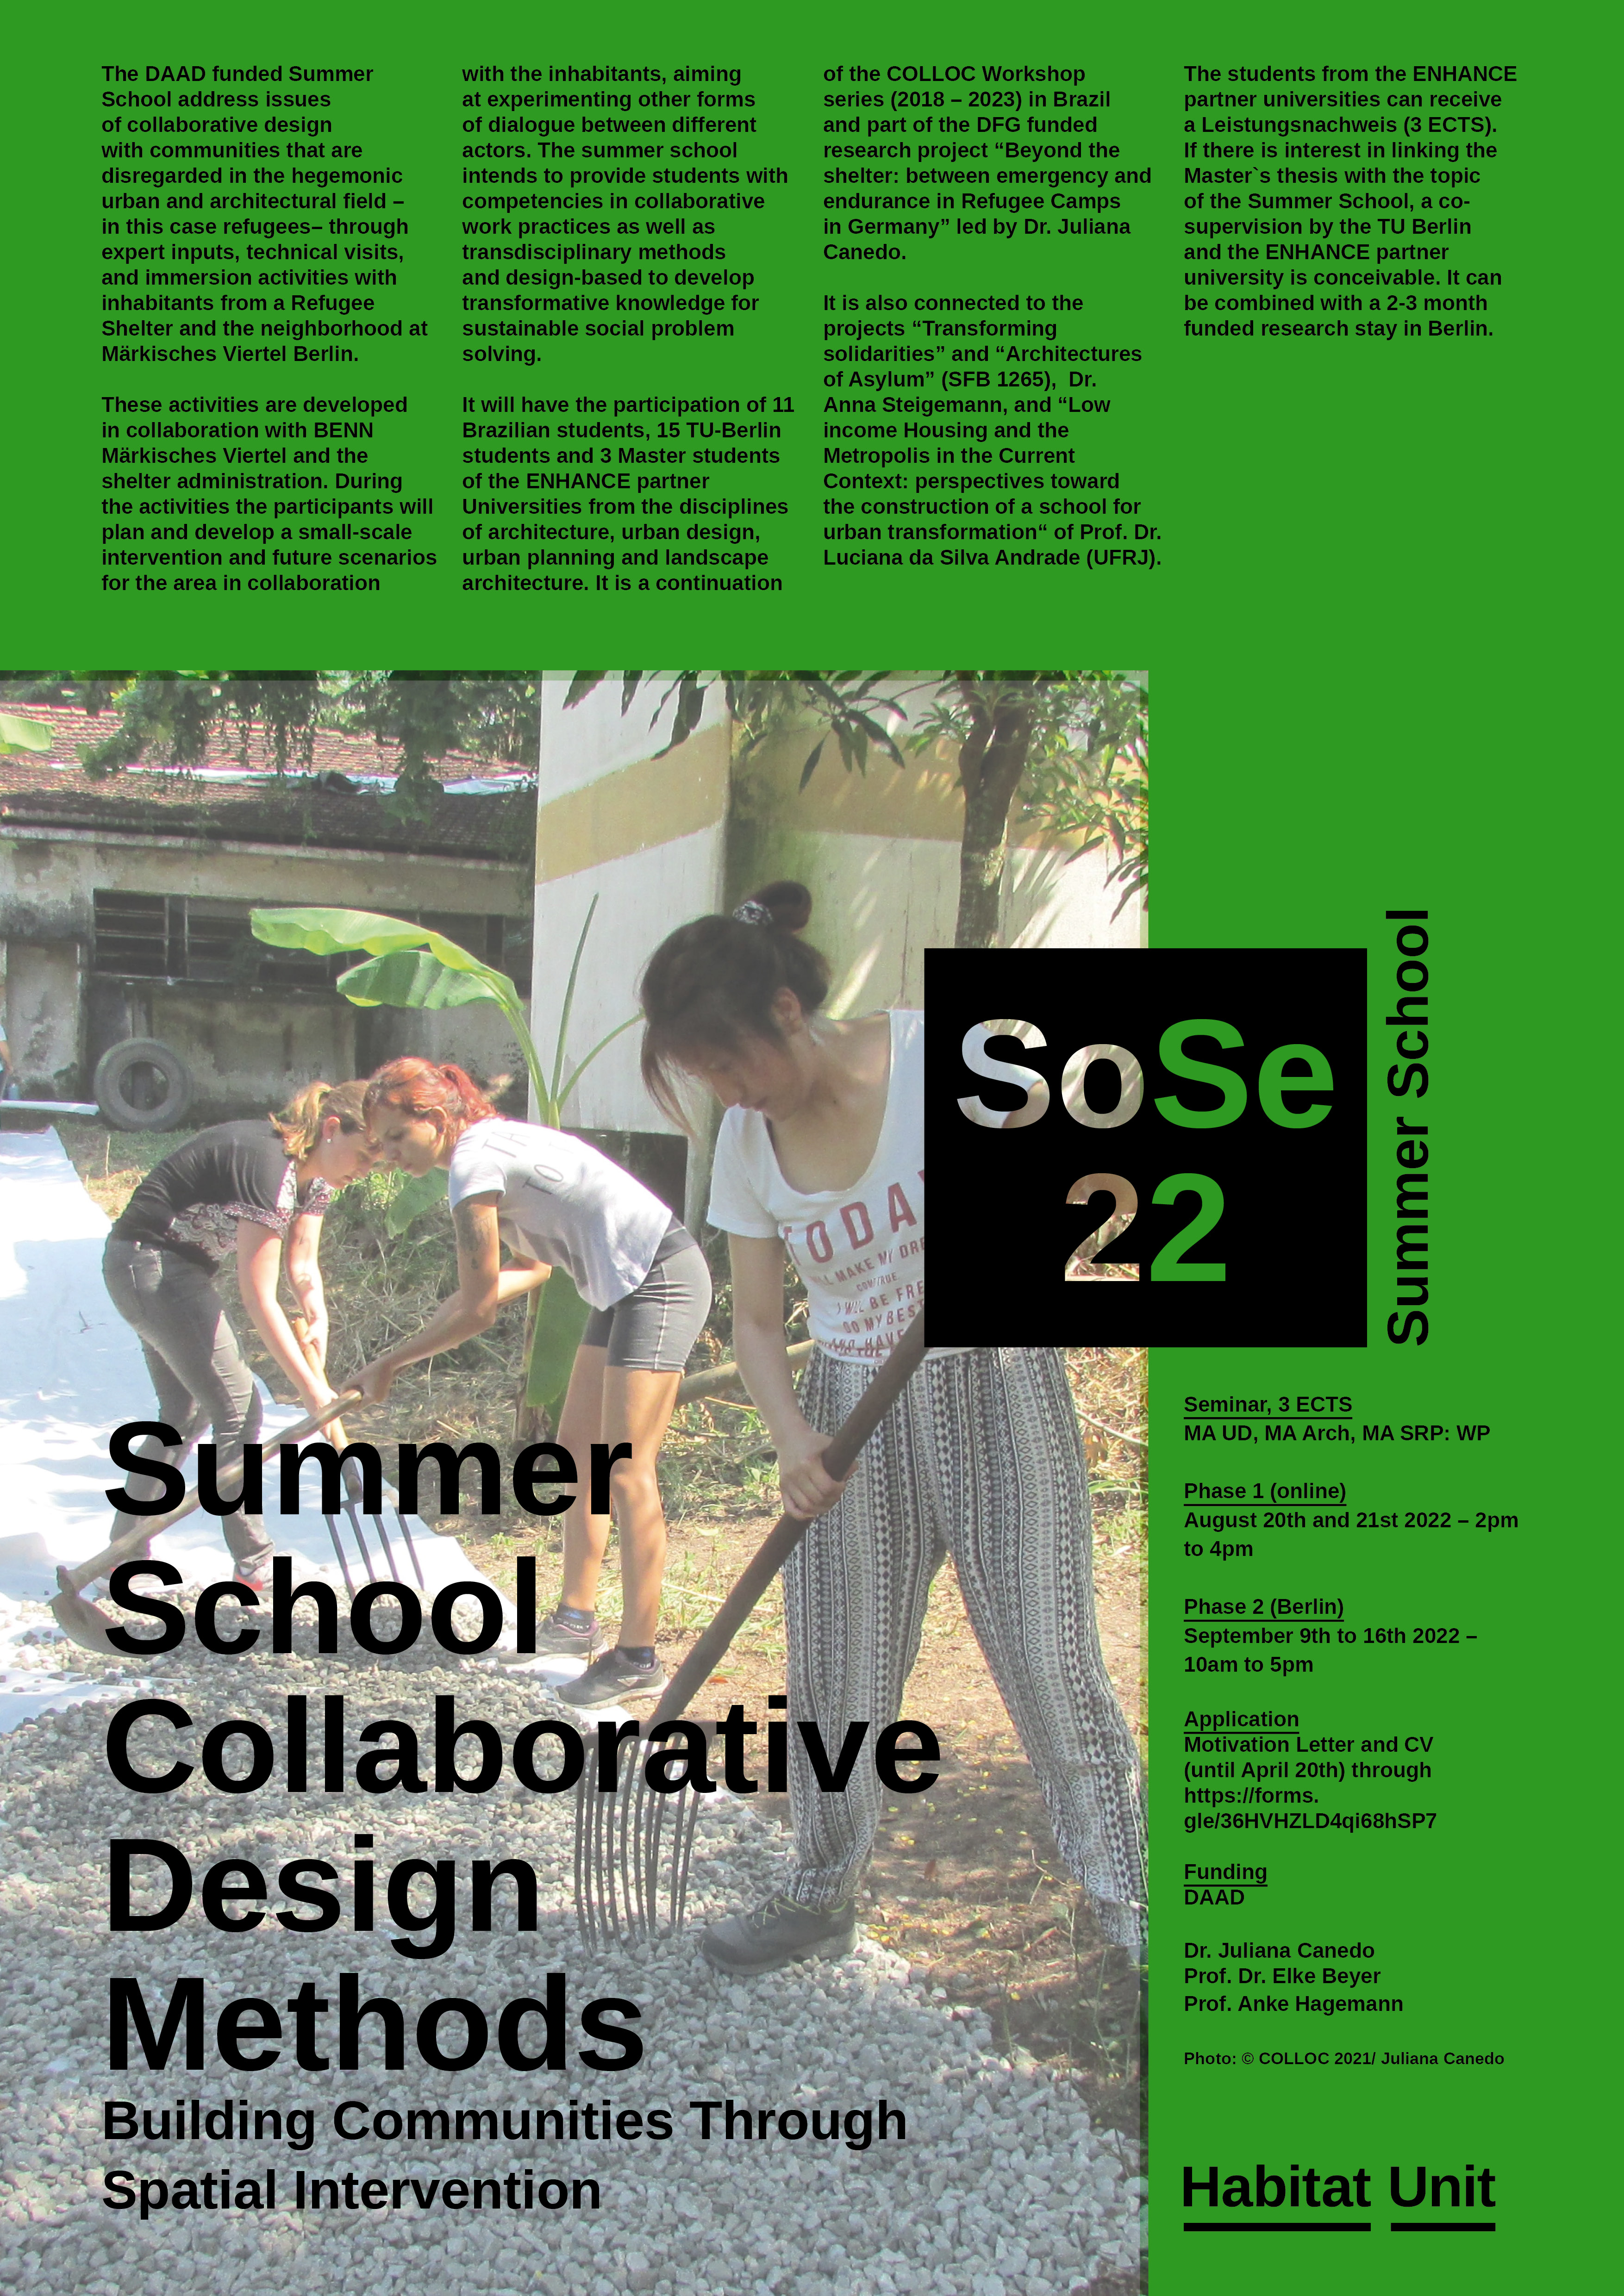 SS2022 Summer School Collab. Design Methods Poster